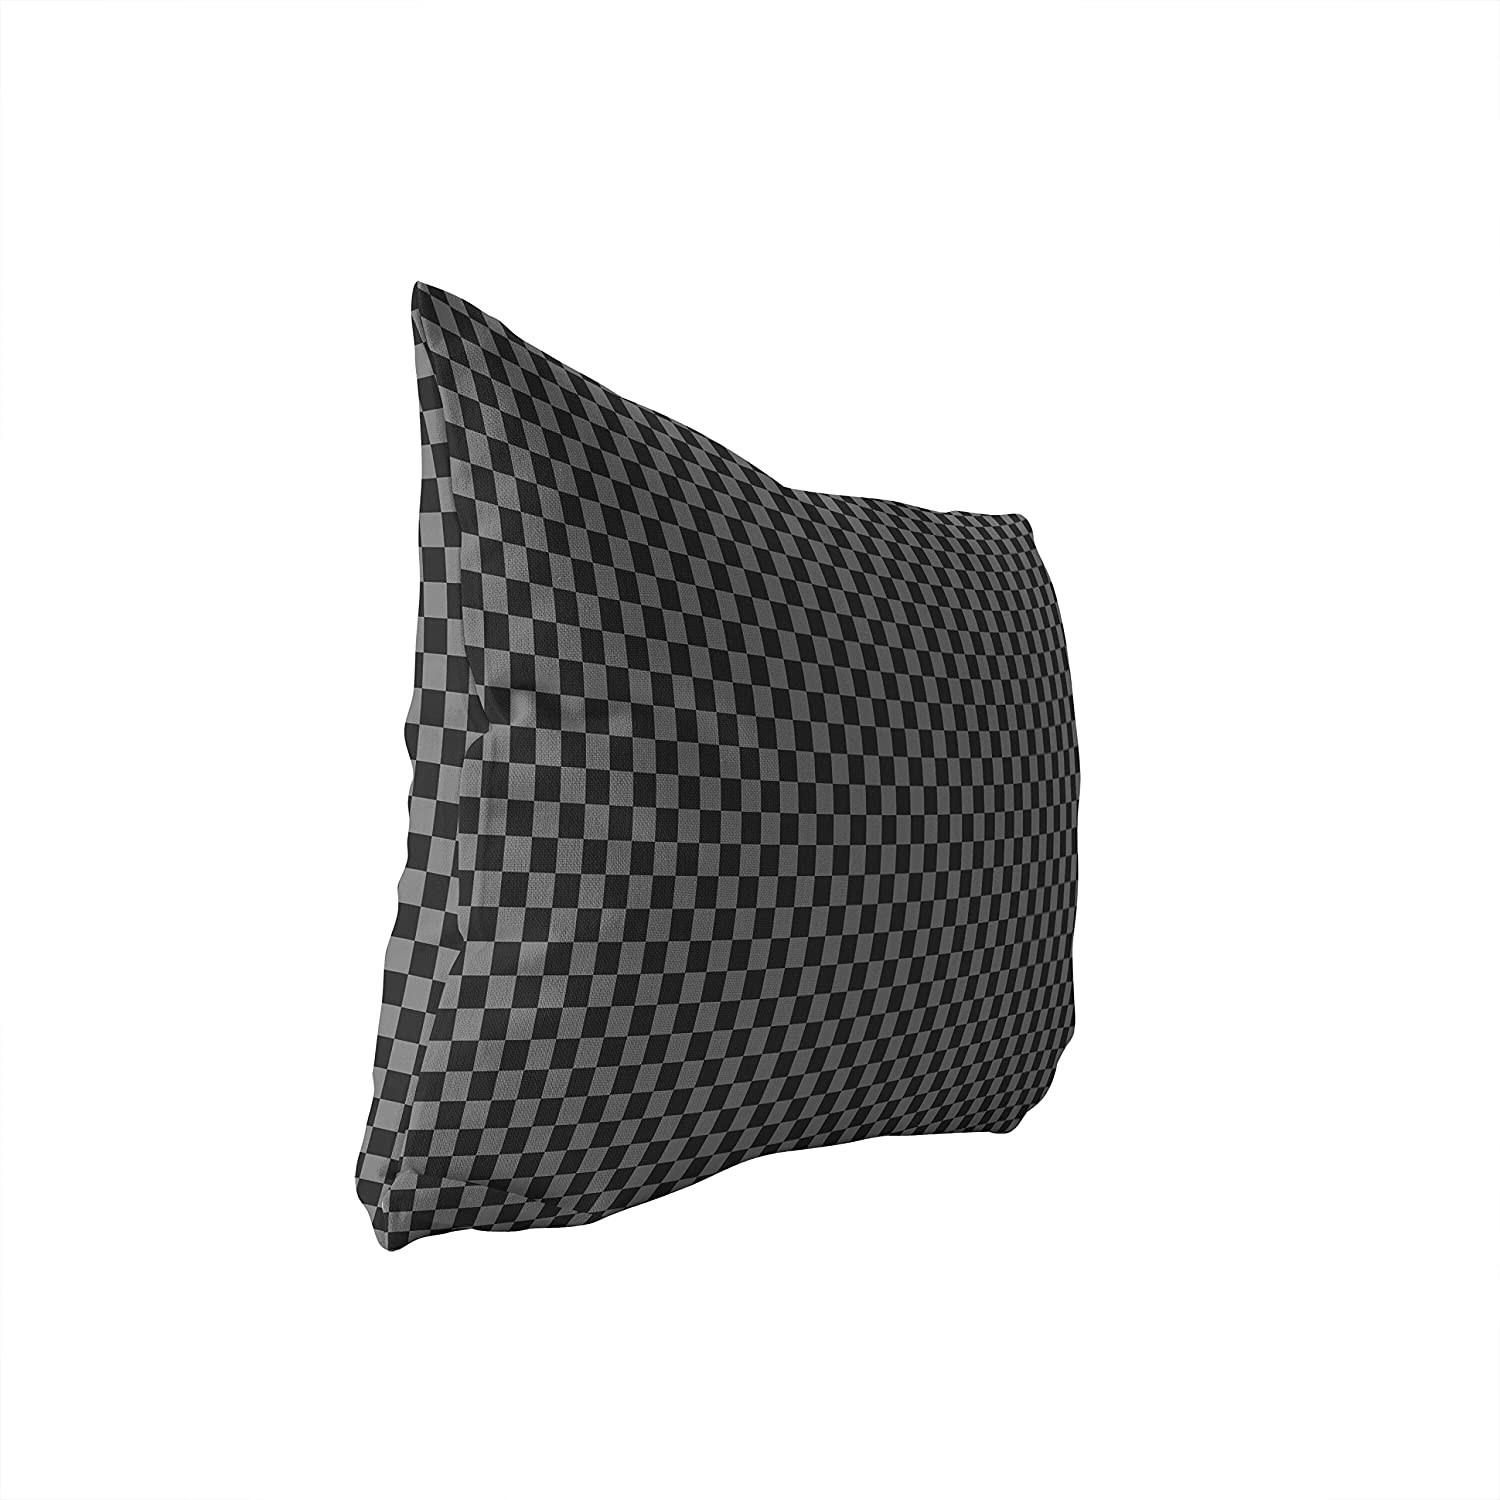 UKN Checker Board Black Grey Lumbar Pillow Black Geometric Modern Contemporary Polyester Single Removable Cover